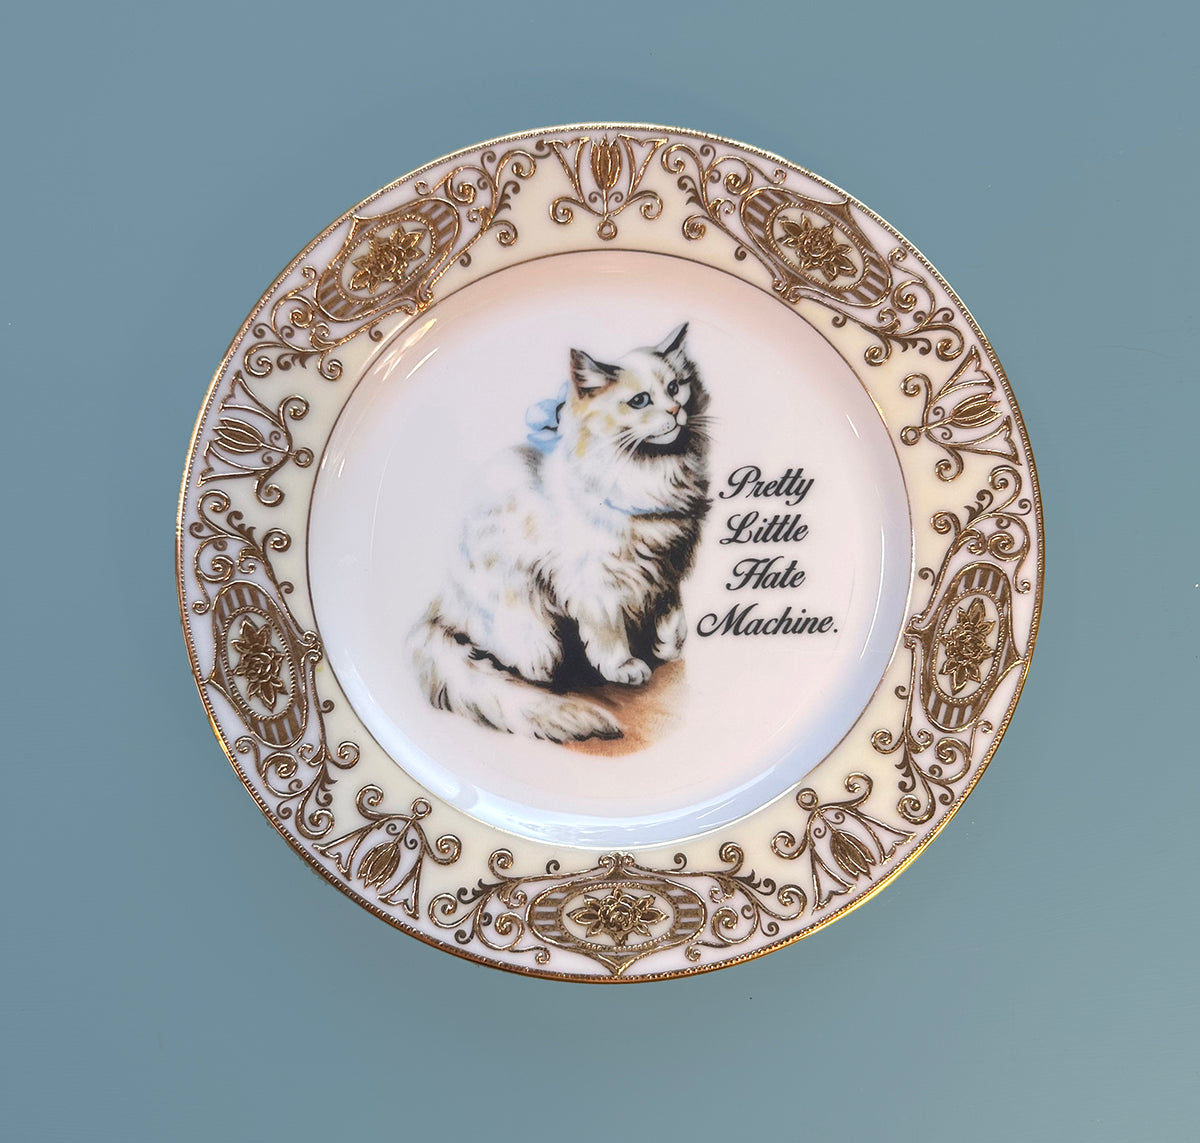 Vintage Art Plate - Cat plate - "Pretty Little Hate Machine."